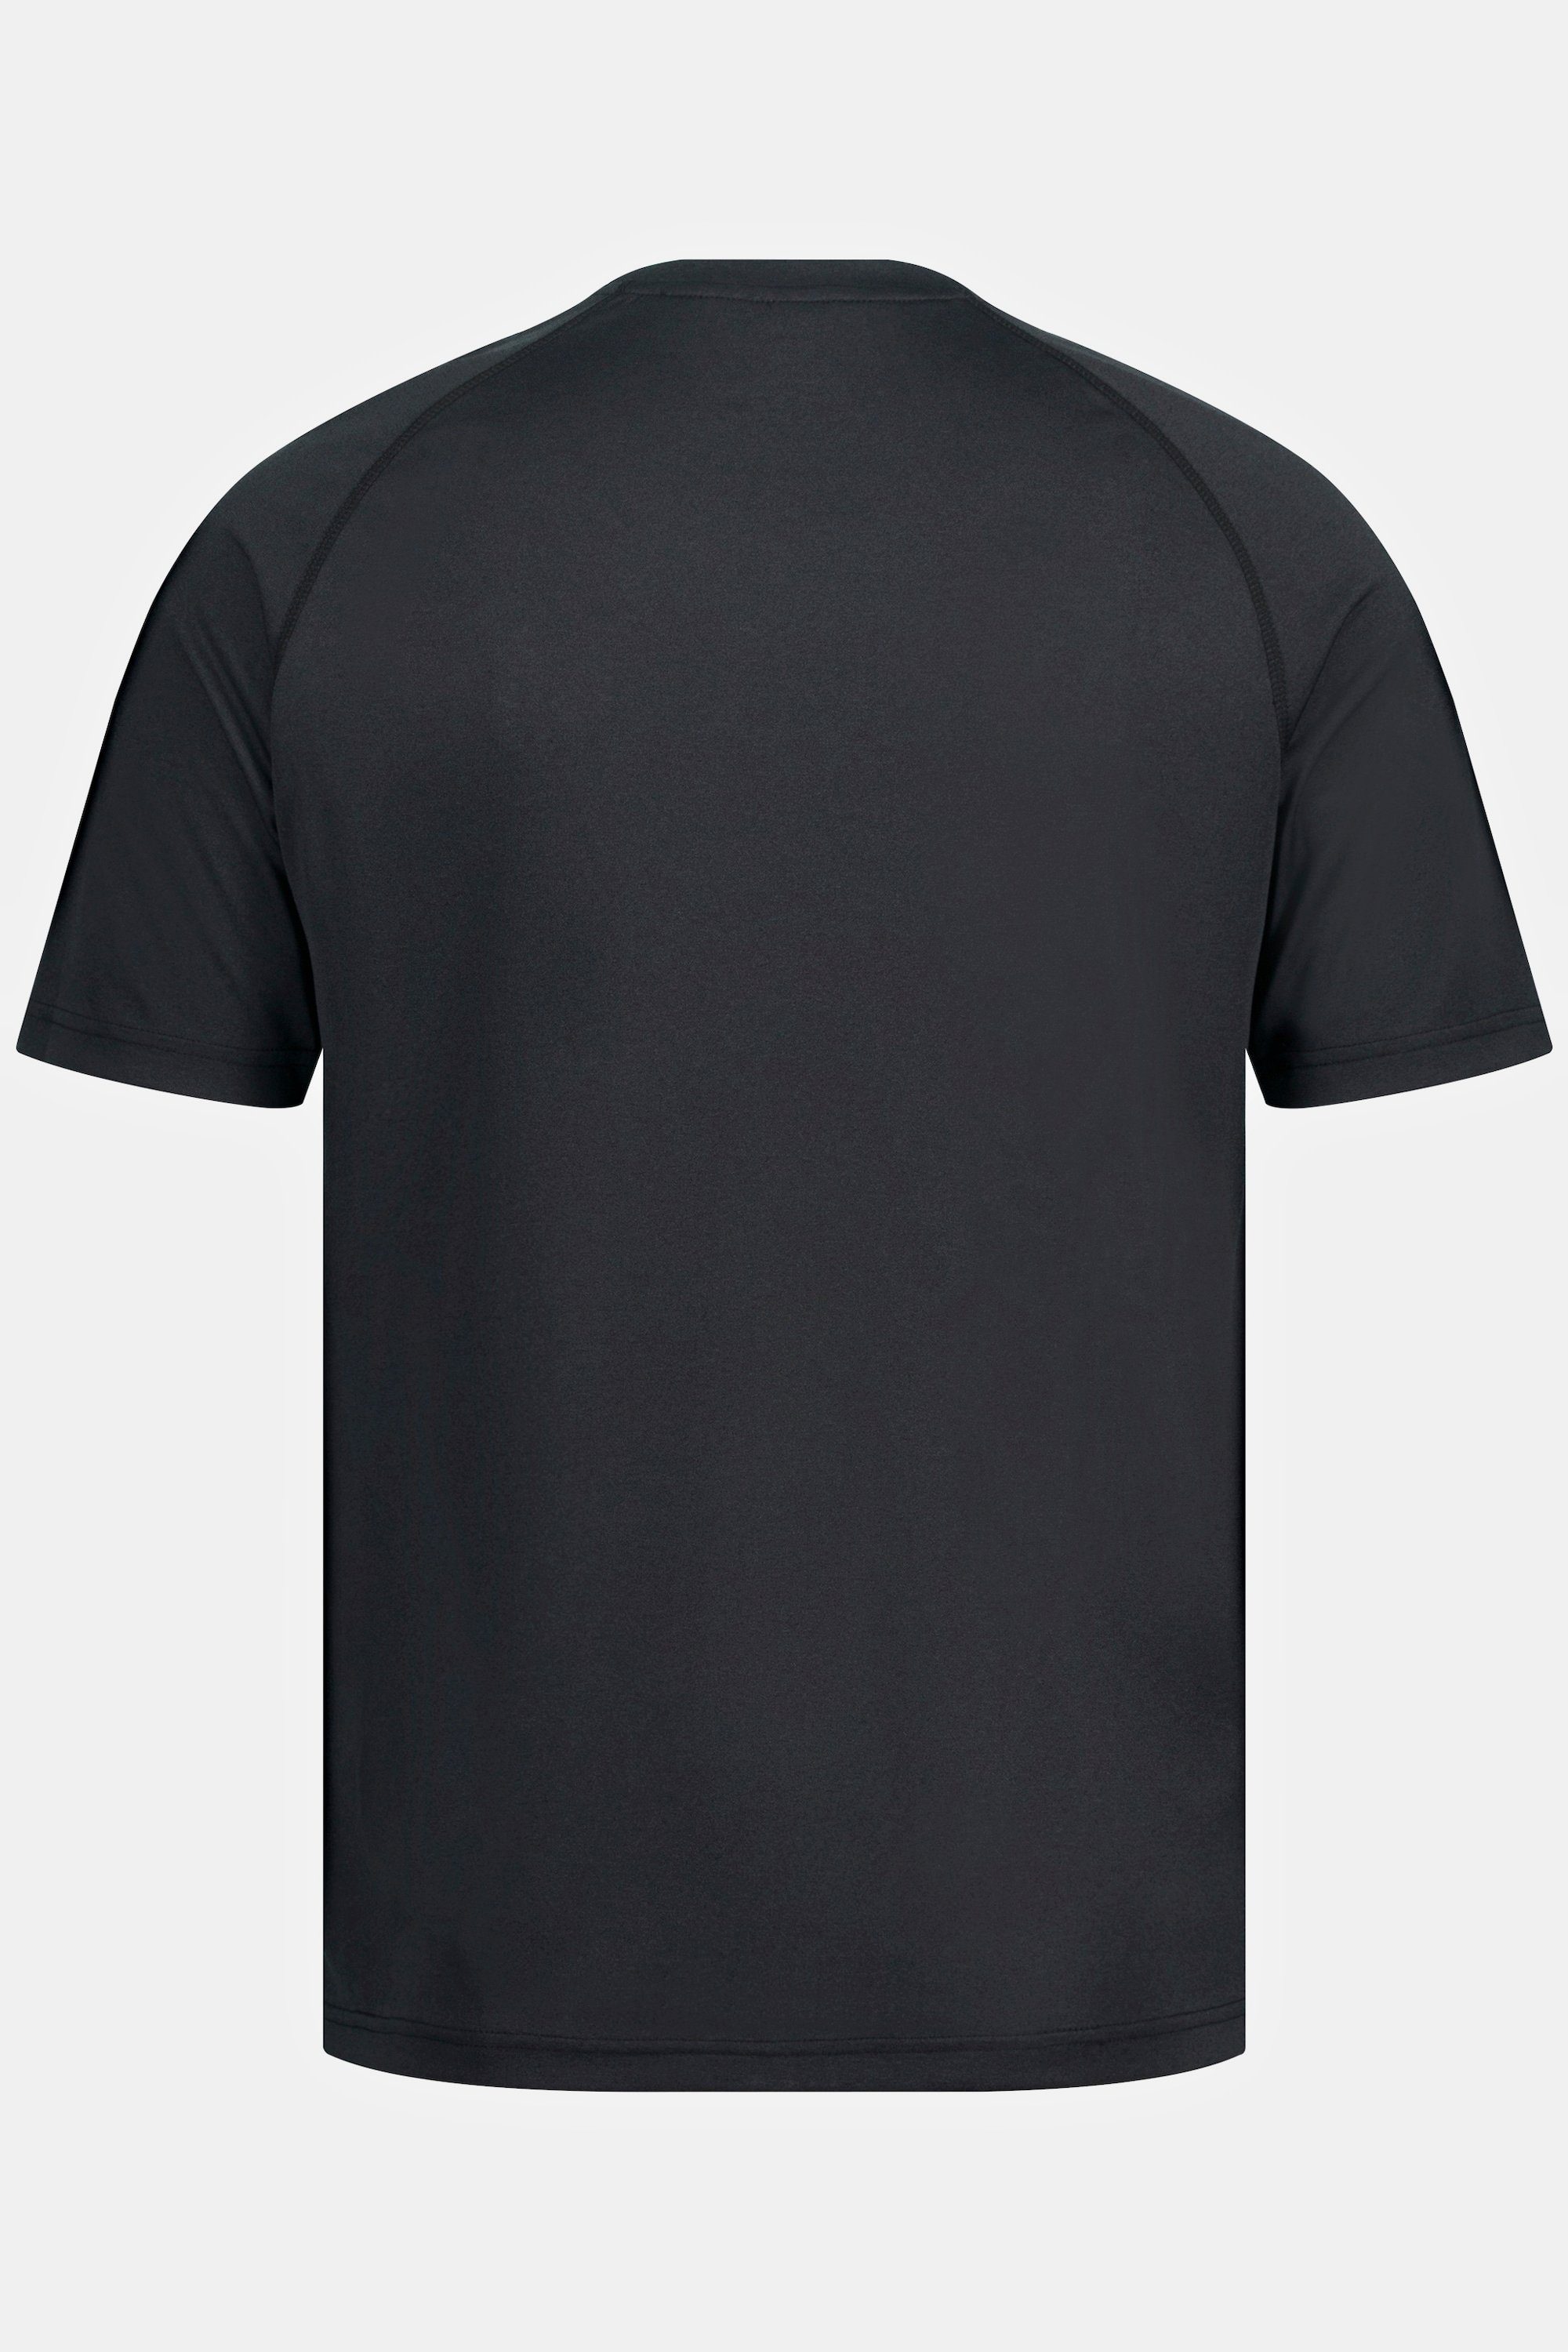 JP1880 T-Shirt Fitness Halbarm Funktions-Shirt QuickDry